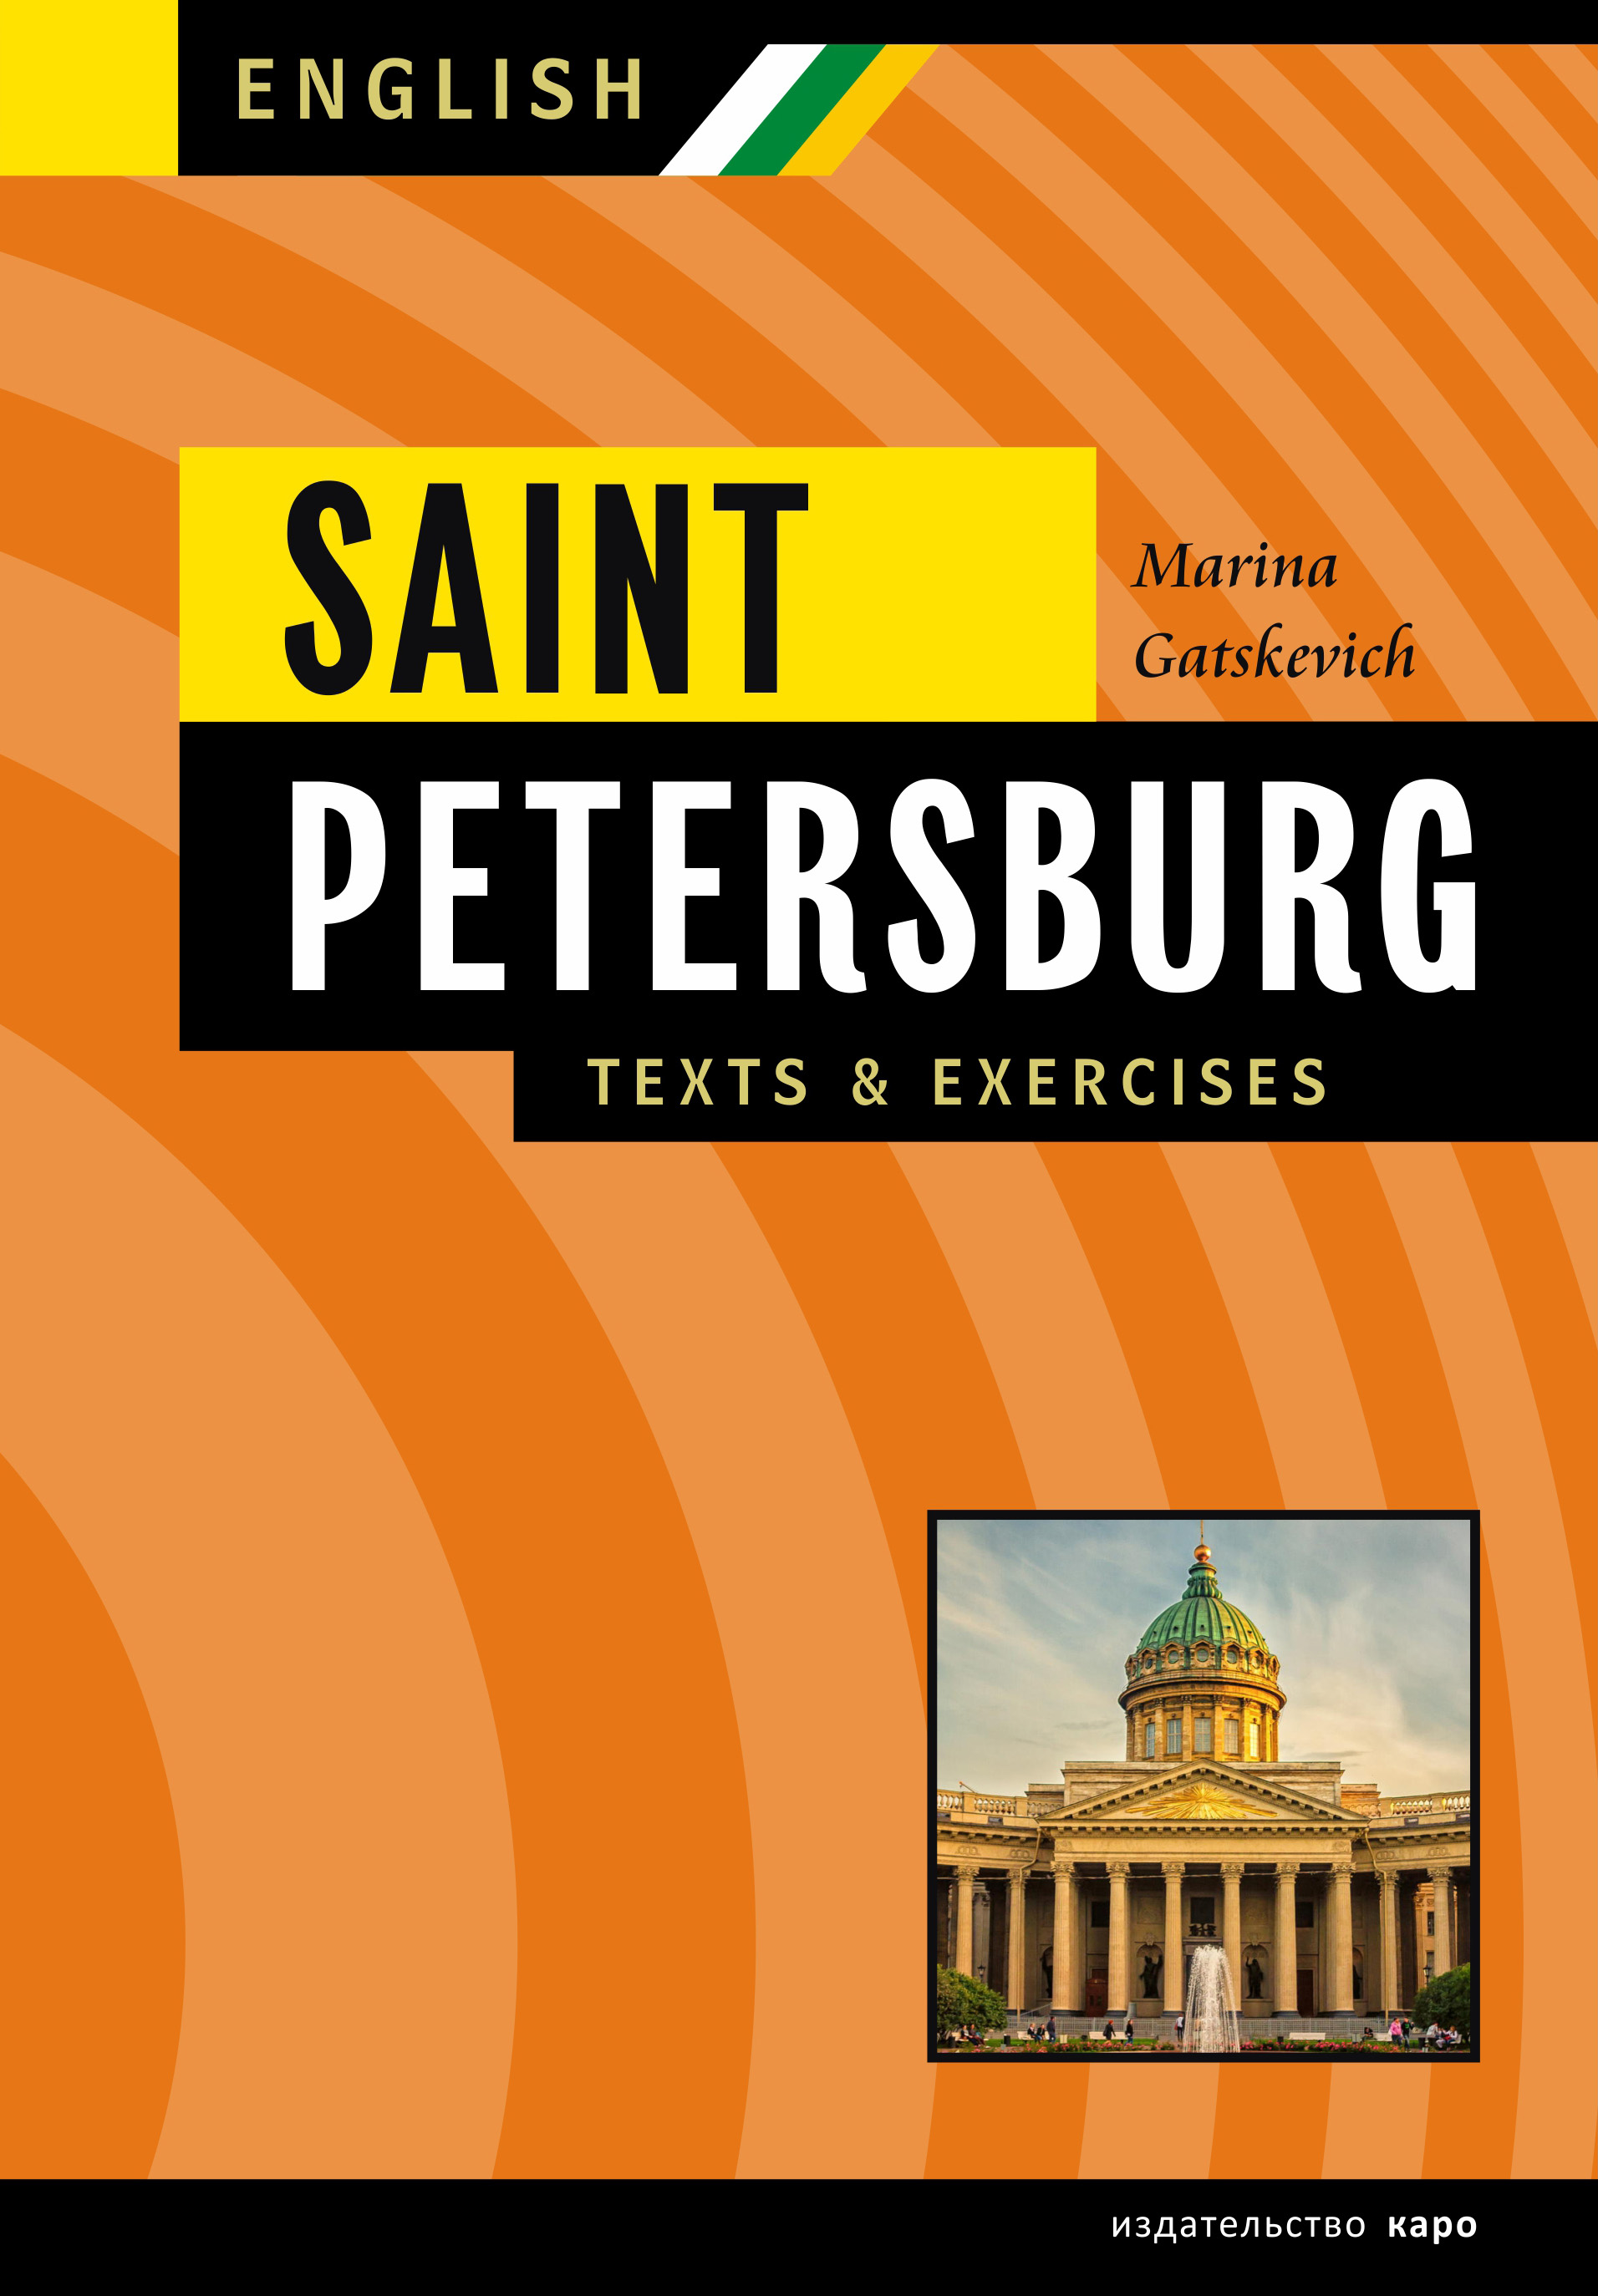 Санкт-Петербург. Тексты, диалоги, упражнения. Книга III / Saint Petersburg. Texts&exercises. Book III